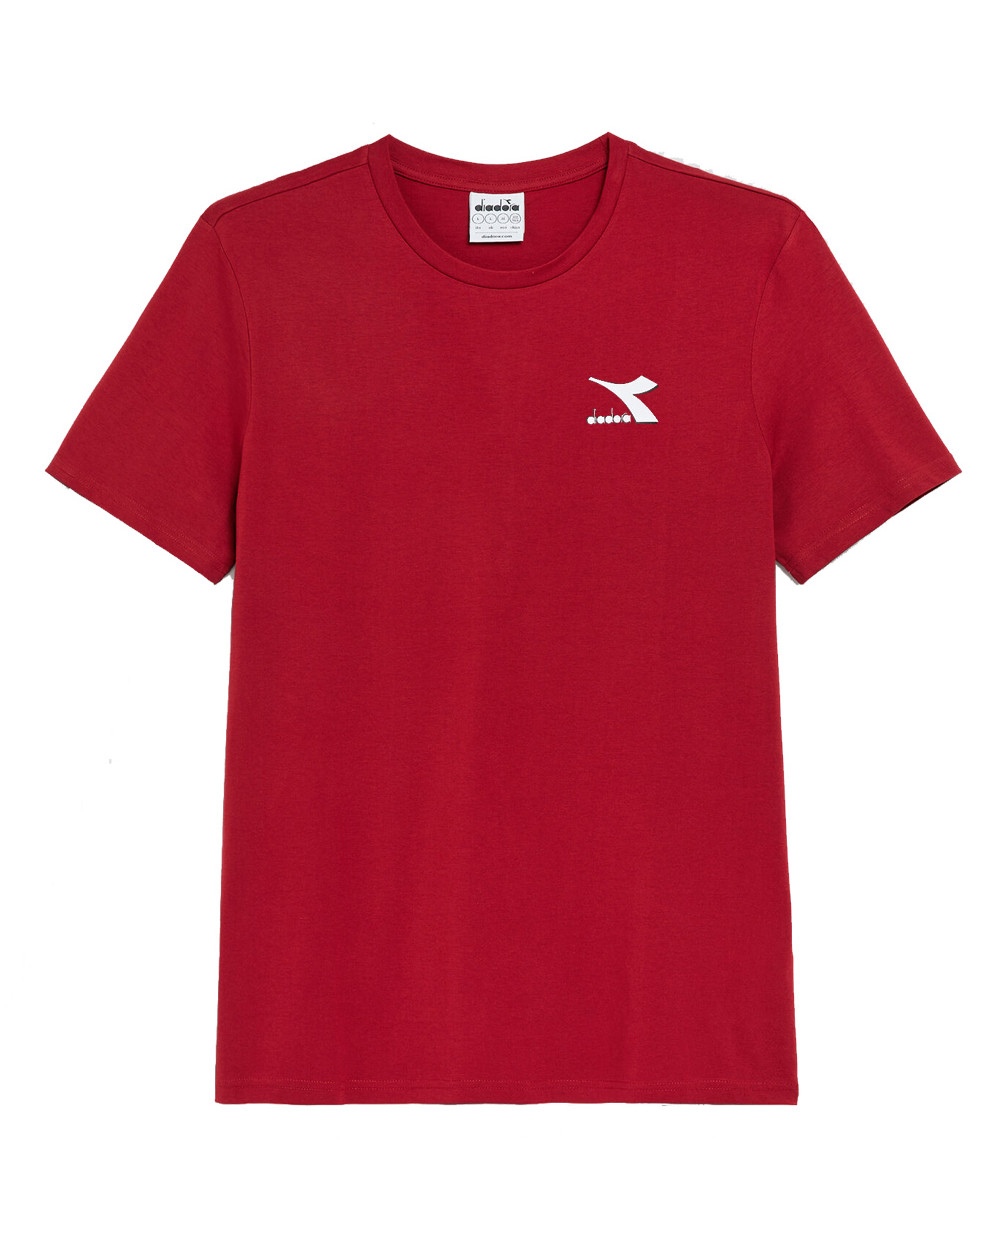  T-shirt tempo libero UOMO Diadora Rosso CORE Cotone